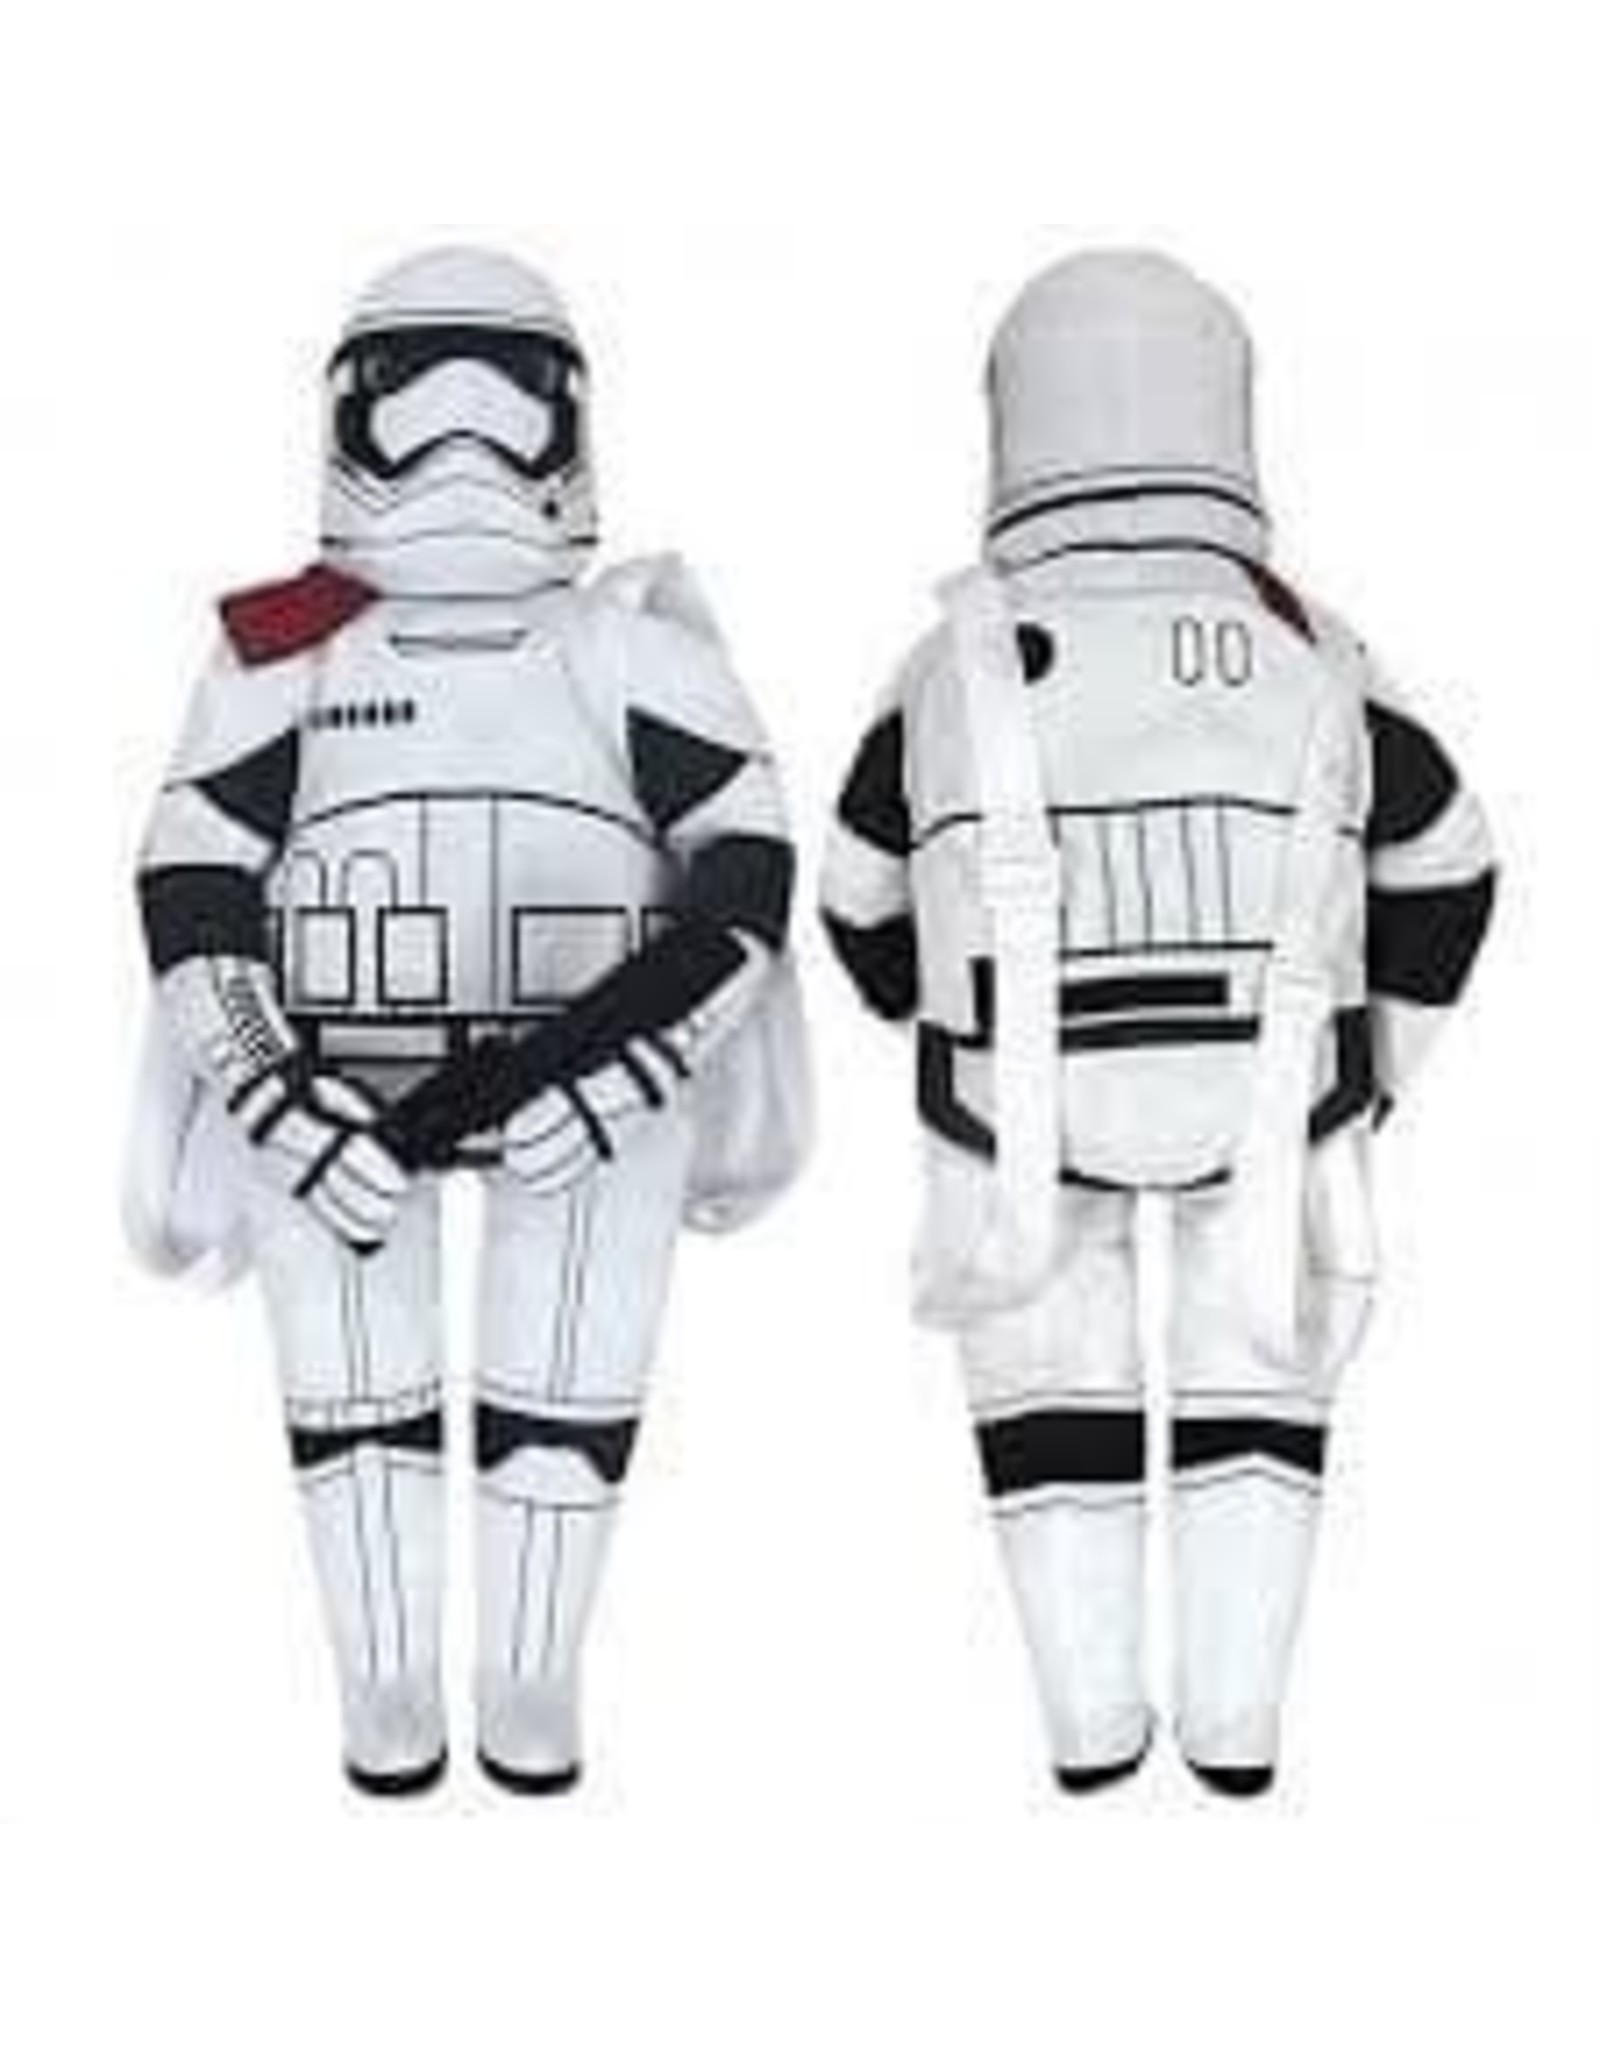 Star Wars Star Wars bags - Star Wars Stormtrooper Buddy Backpack